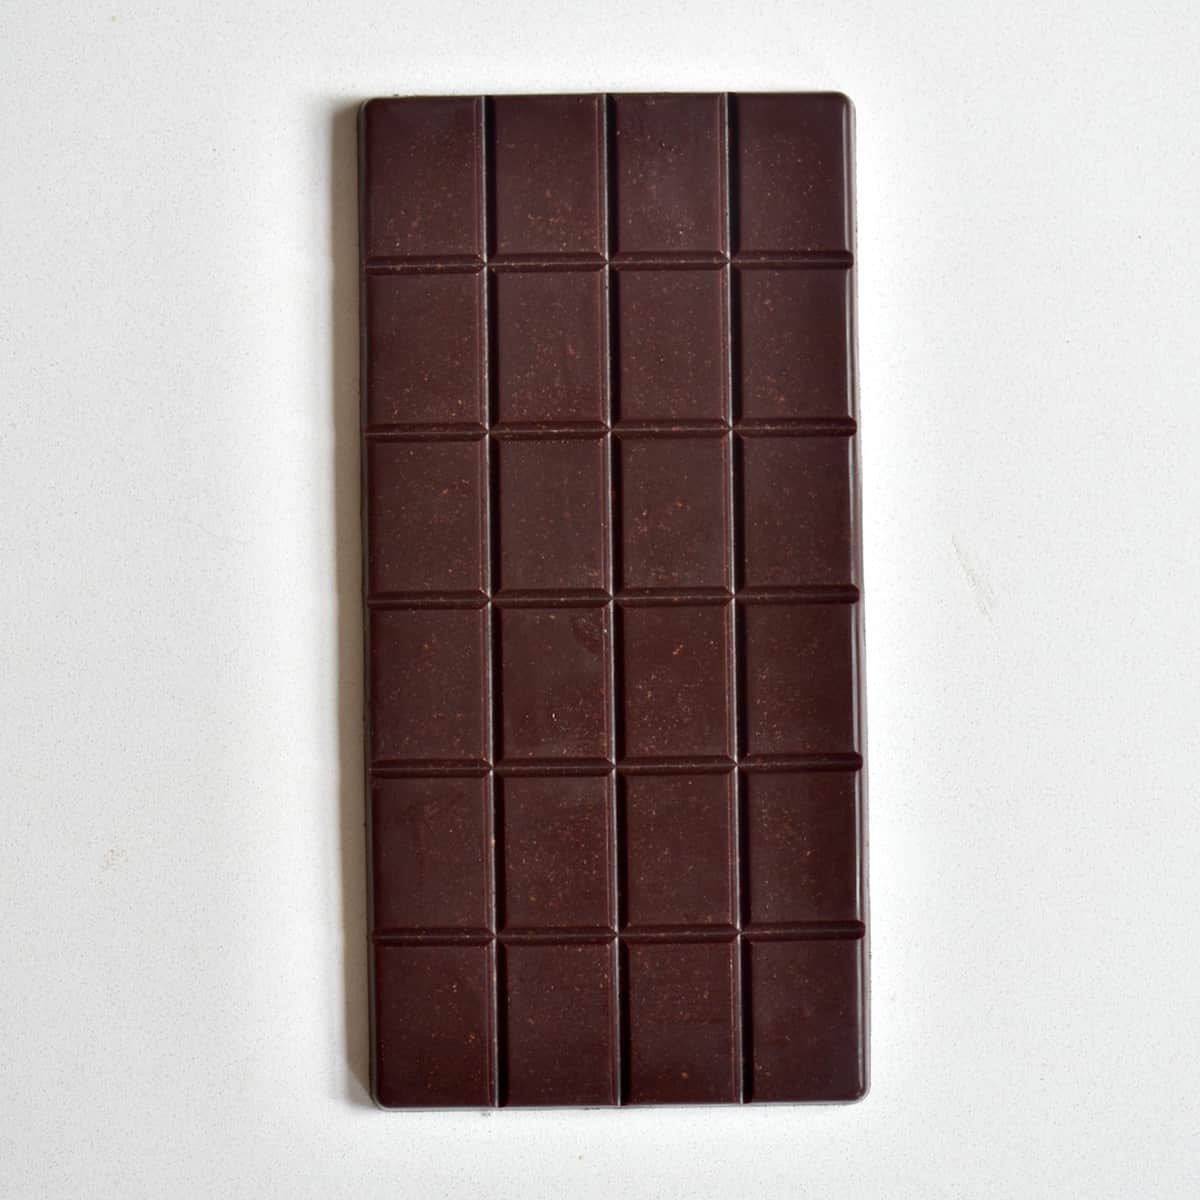 https://www.alphafoodie.com/wp-content/uploads/2020/06/milk-chocolate-bar-square.jpeg